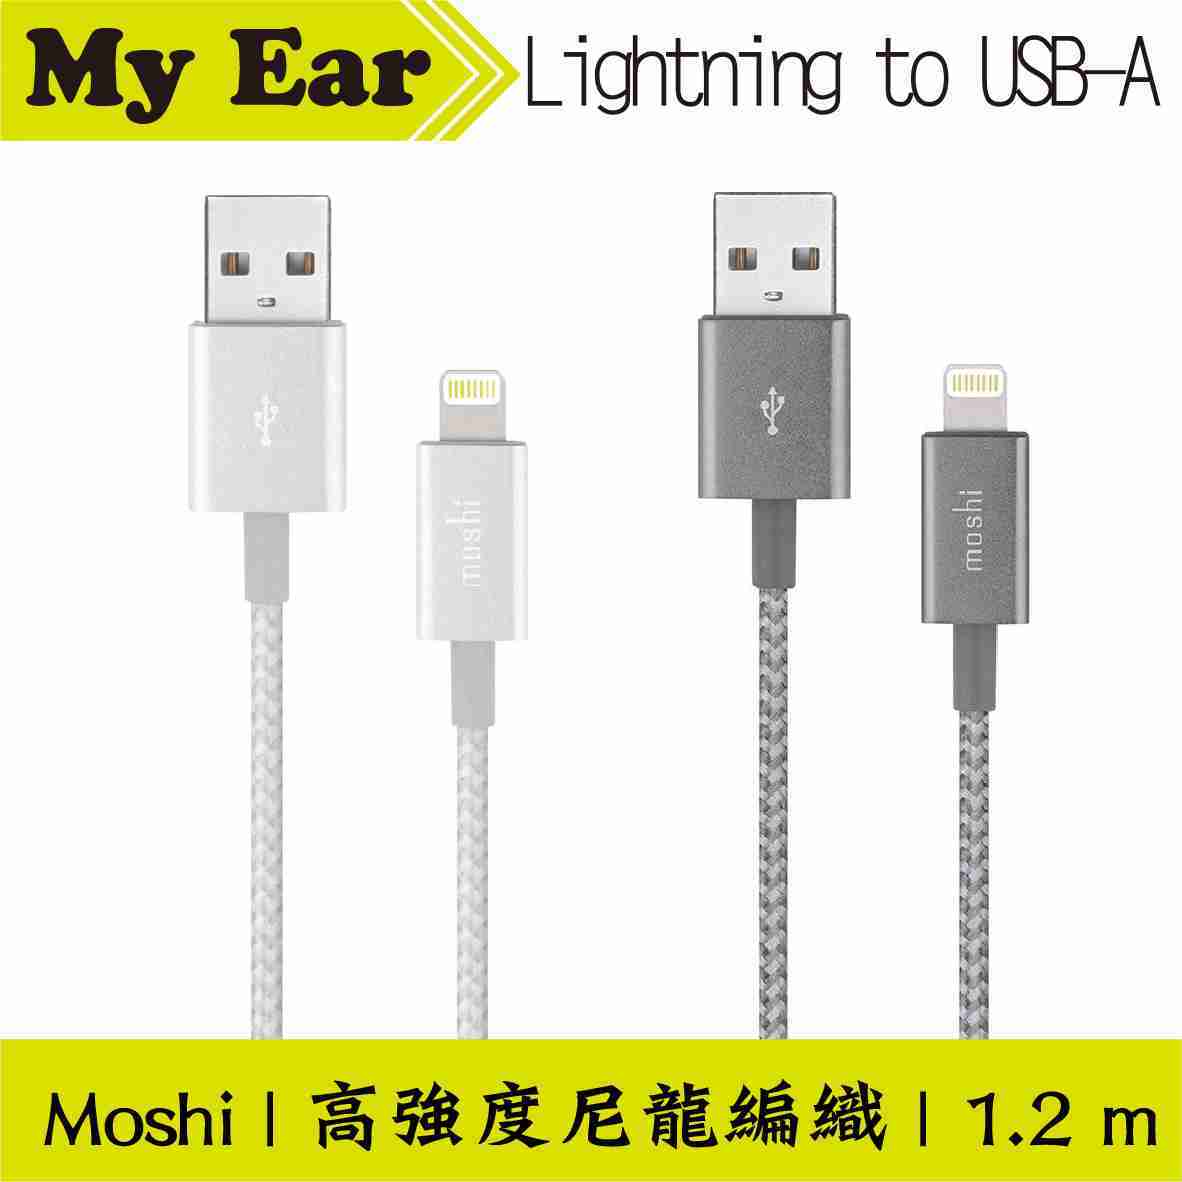 Moshi Integra™強韌系列 Lightning to USB-A 充電線1.2m | My Ear 耳機專門店